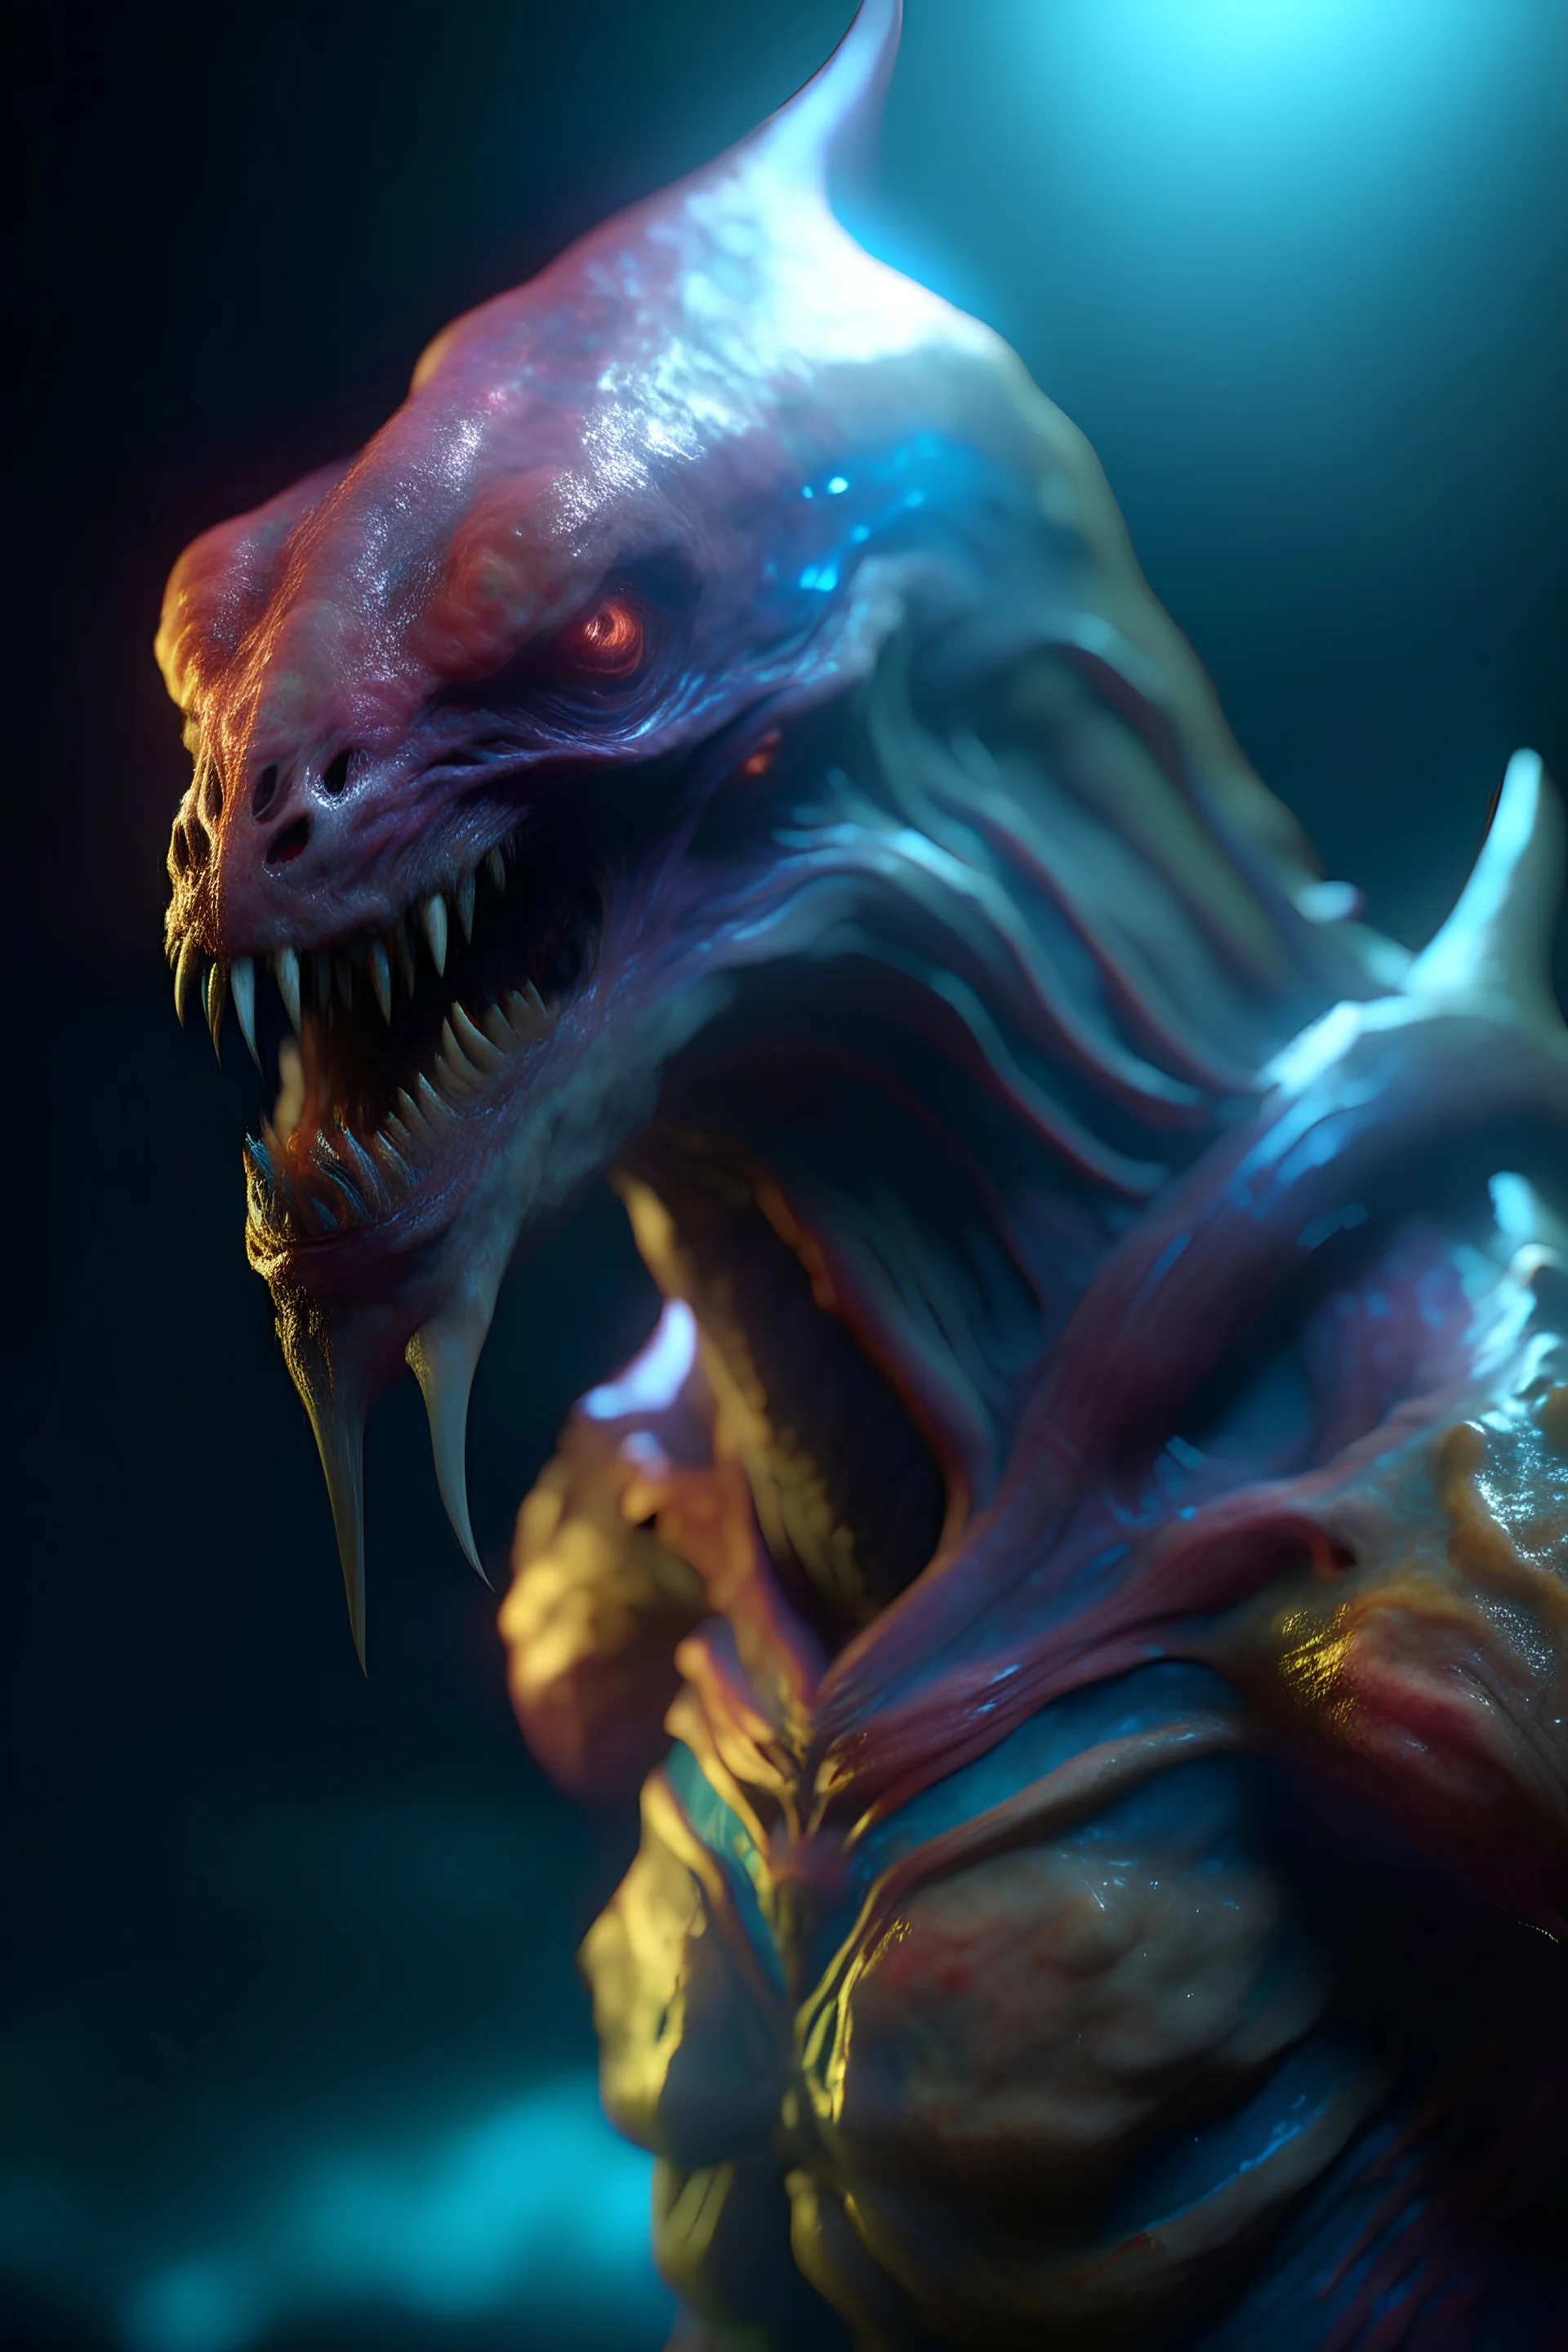 Human Alien lion galaxy shark ,8k, high detail, smooth render, unreal engine 5, cinema 4d, HDR, dust effect, vivid colors